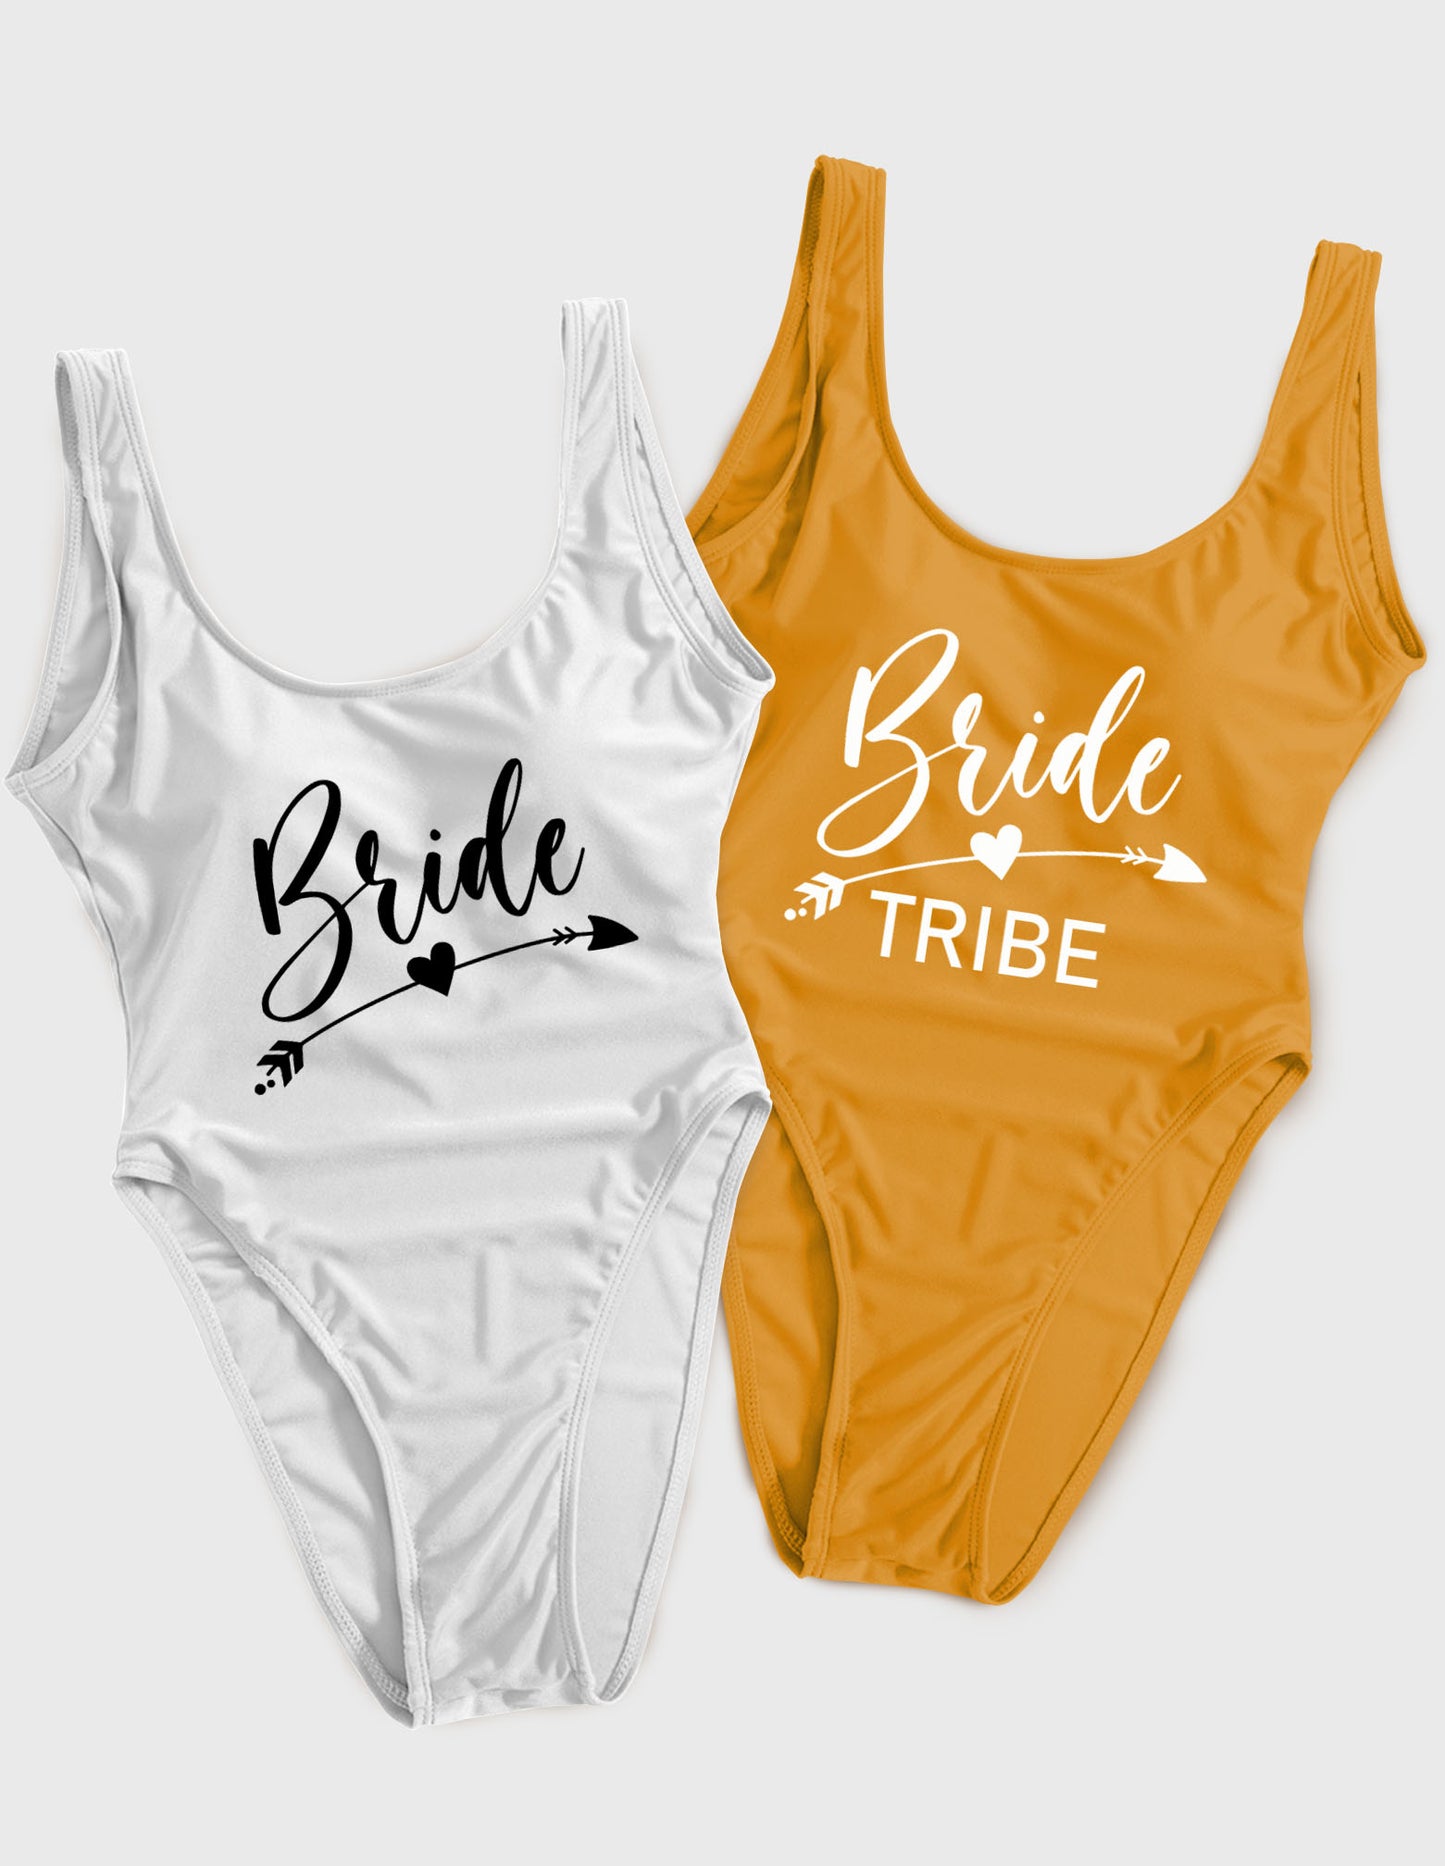 Bride & Bride Tribe Bachelorette Swimsuit